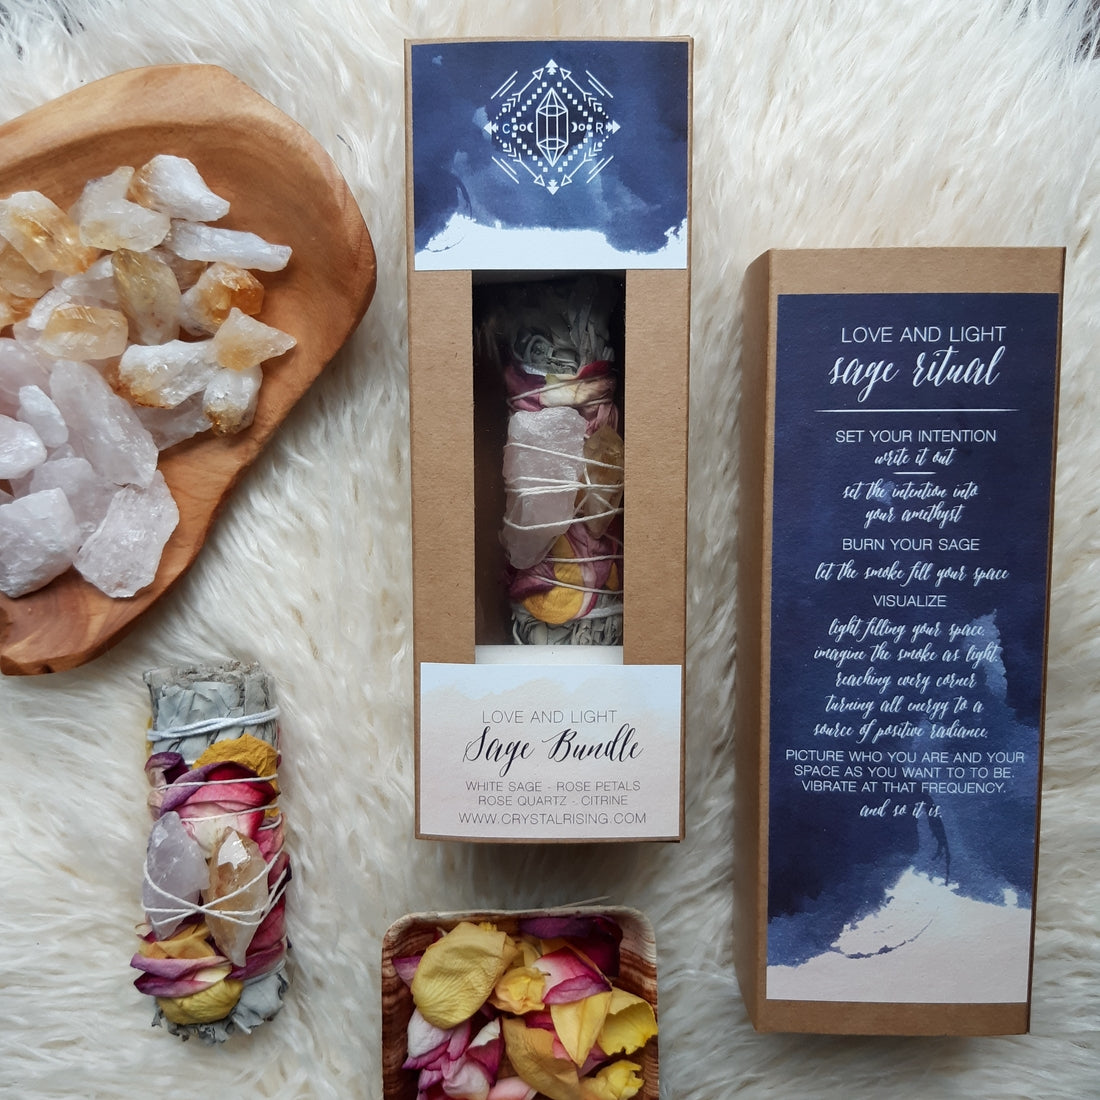 Love and Light Sage Bundle Kit - Crystal Rising for sale at Modest Hemp Co.